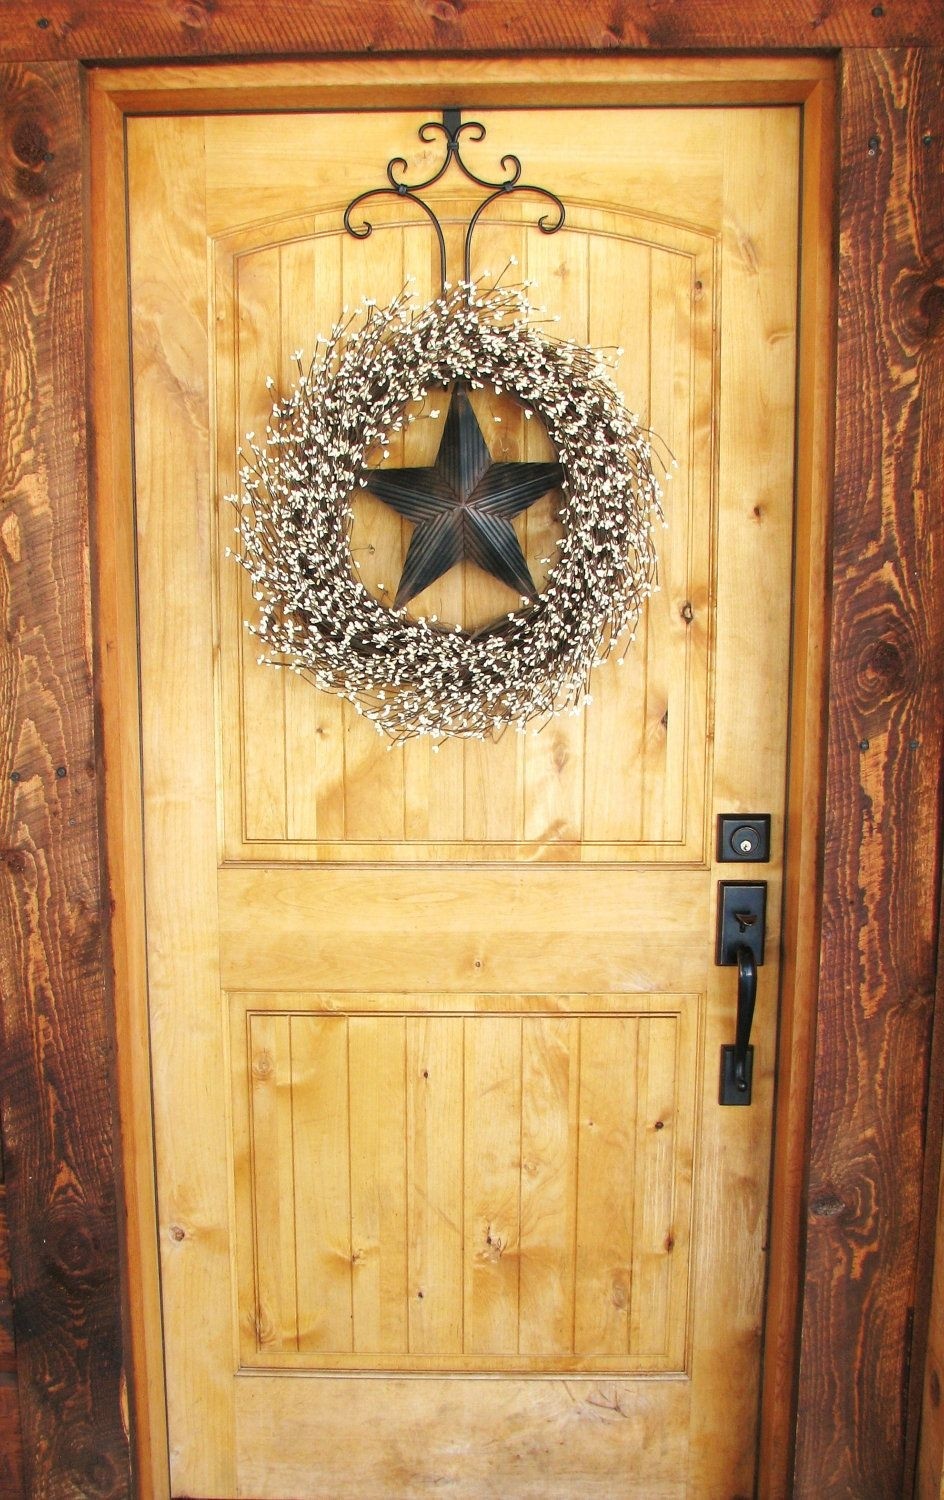 Rustic barn star wreath large wreath